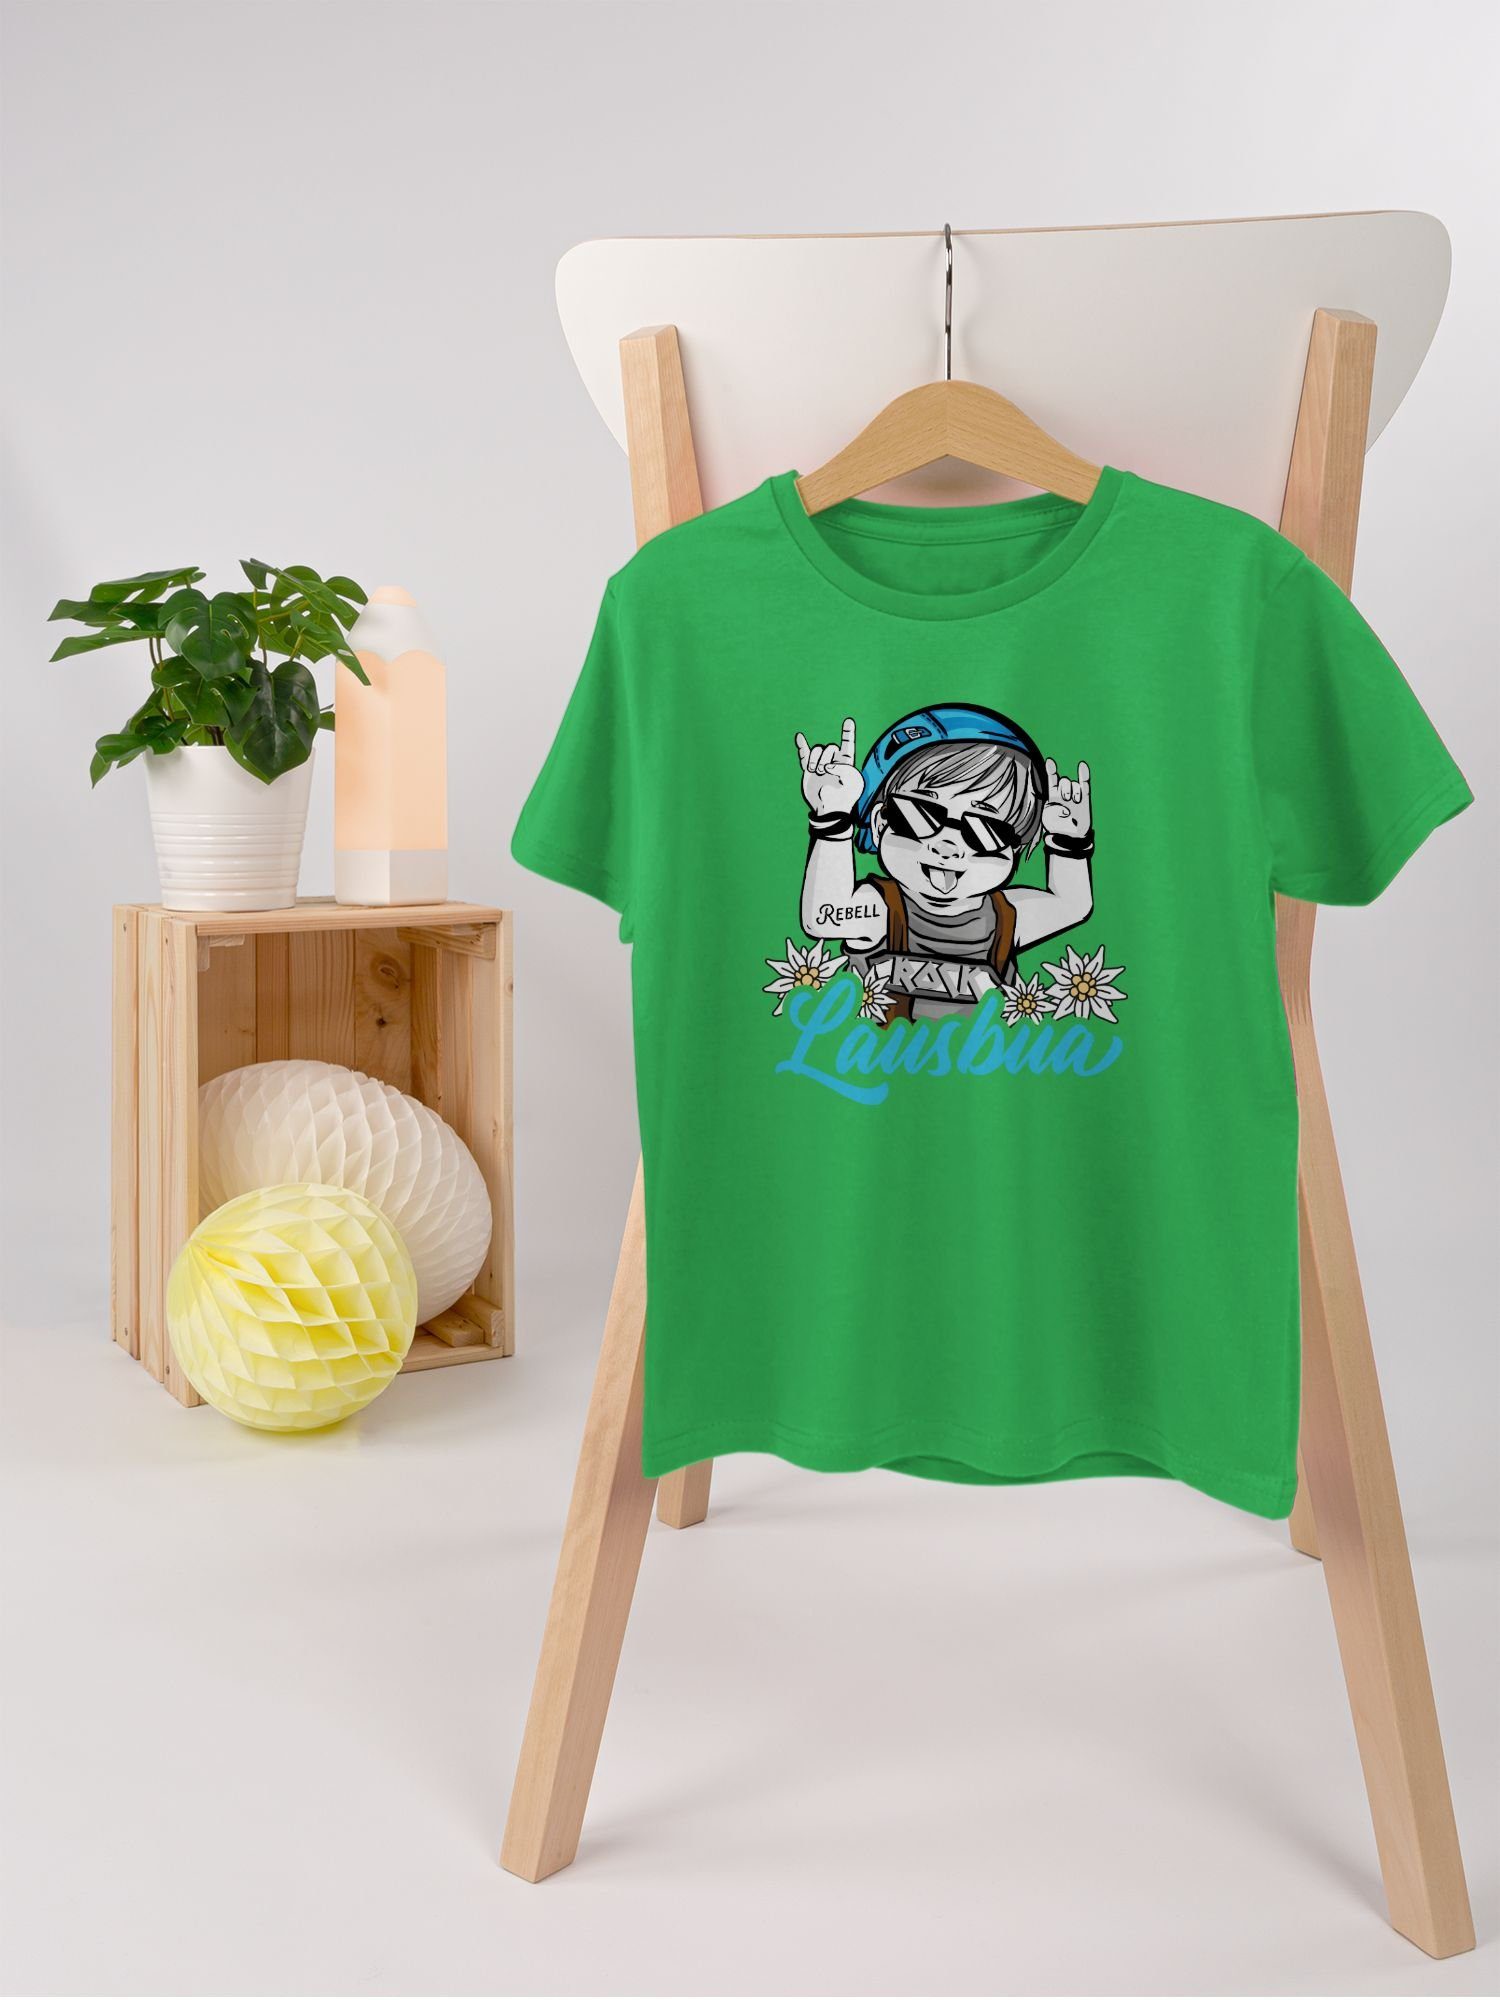 Shirtracer T-Shirt Grün Oktoberfest für - Kinder Lausbua blau Outfit Mode 2